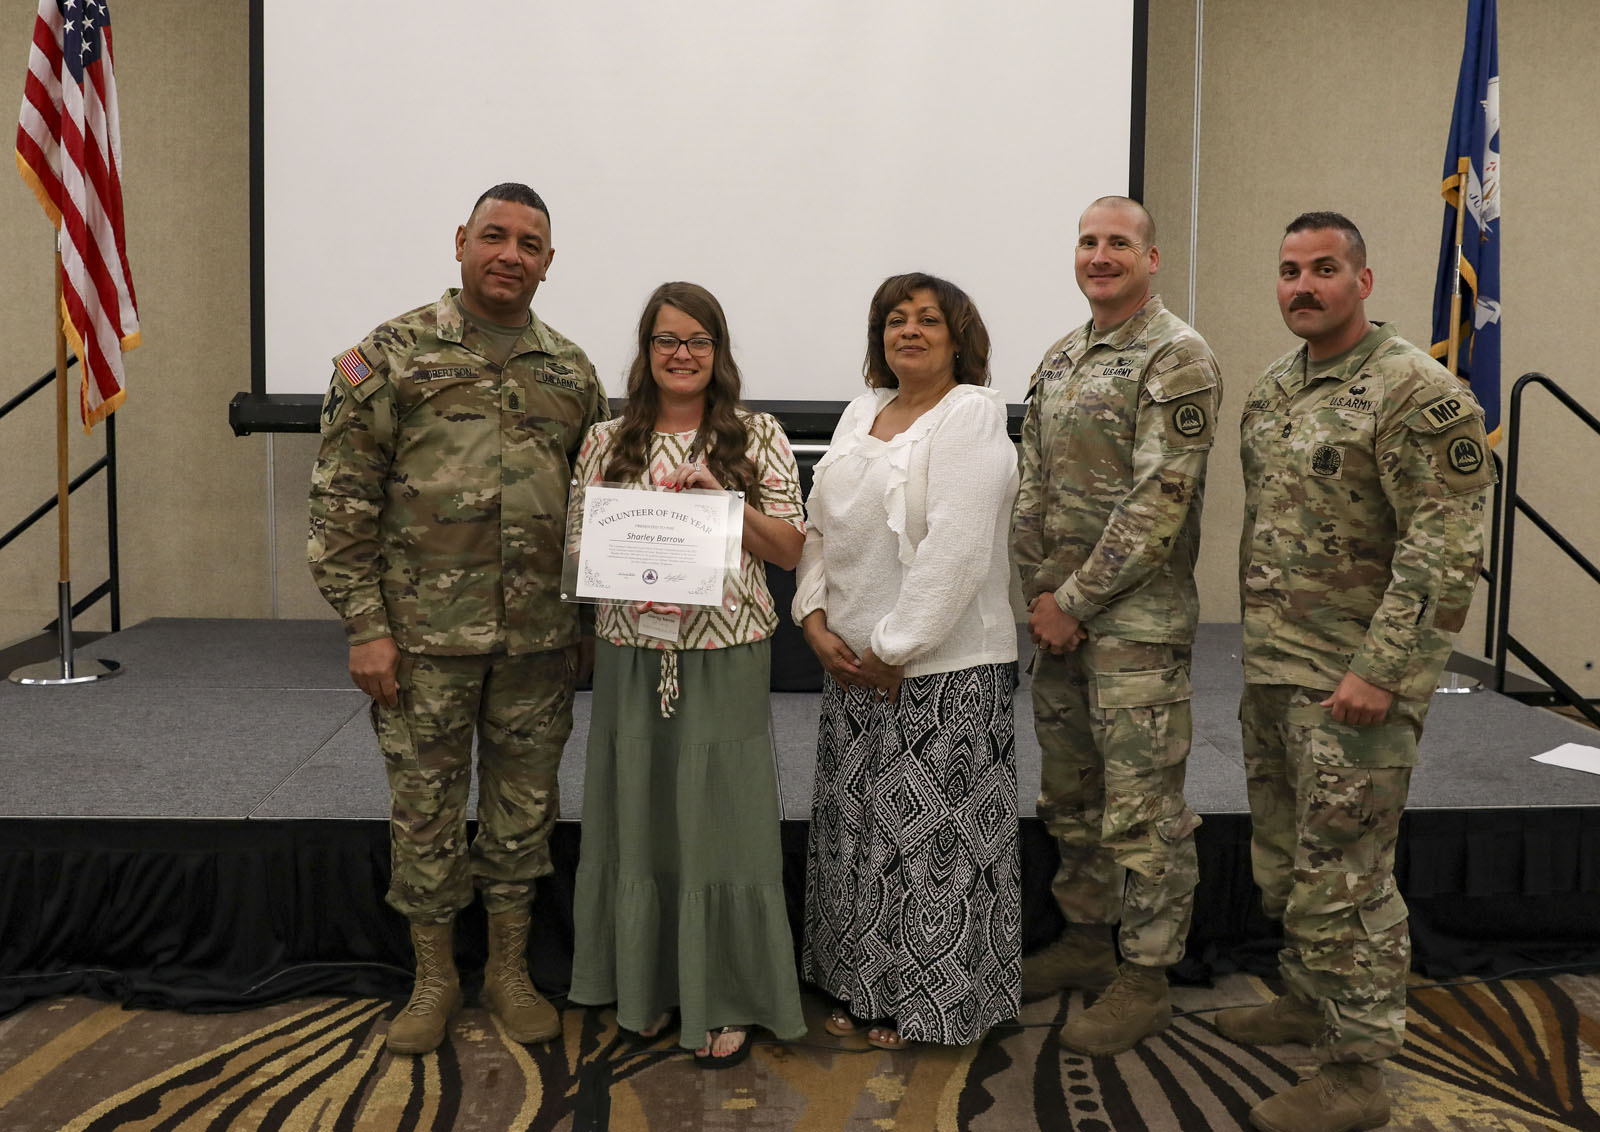 La. Guard recognizes family volunteers at annual workshop